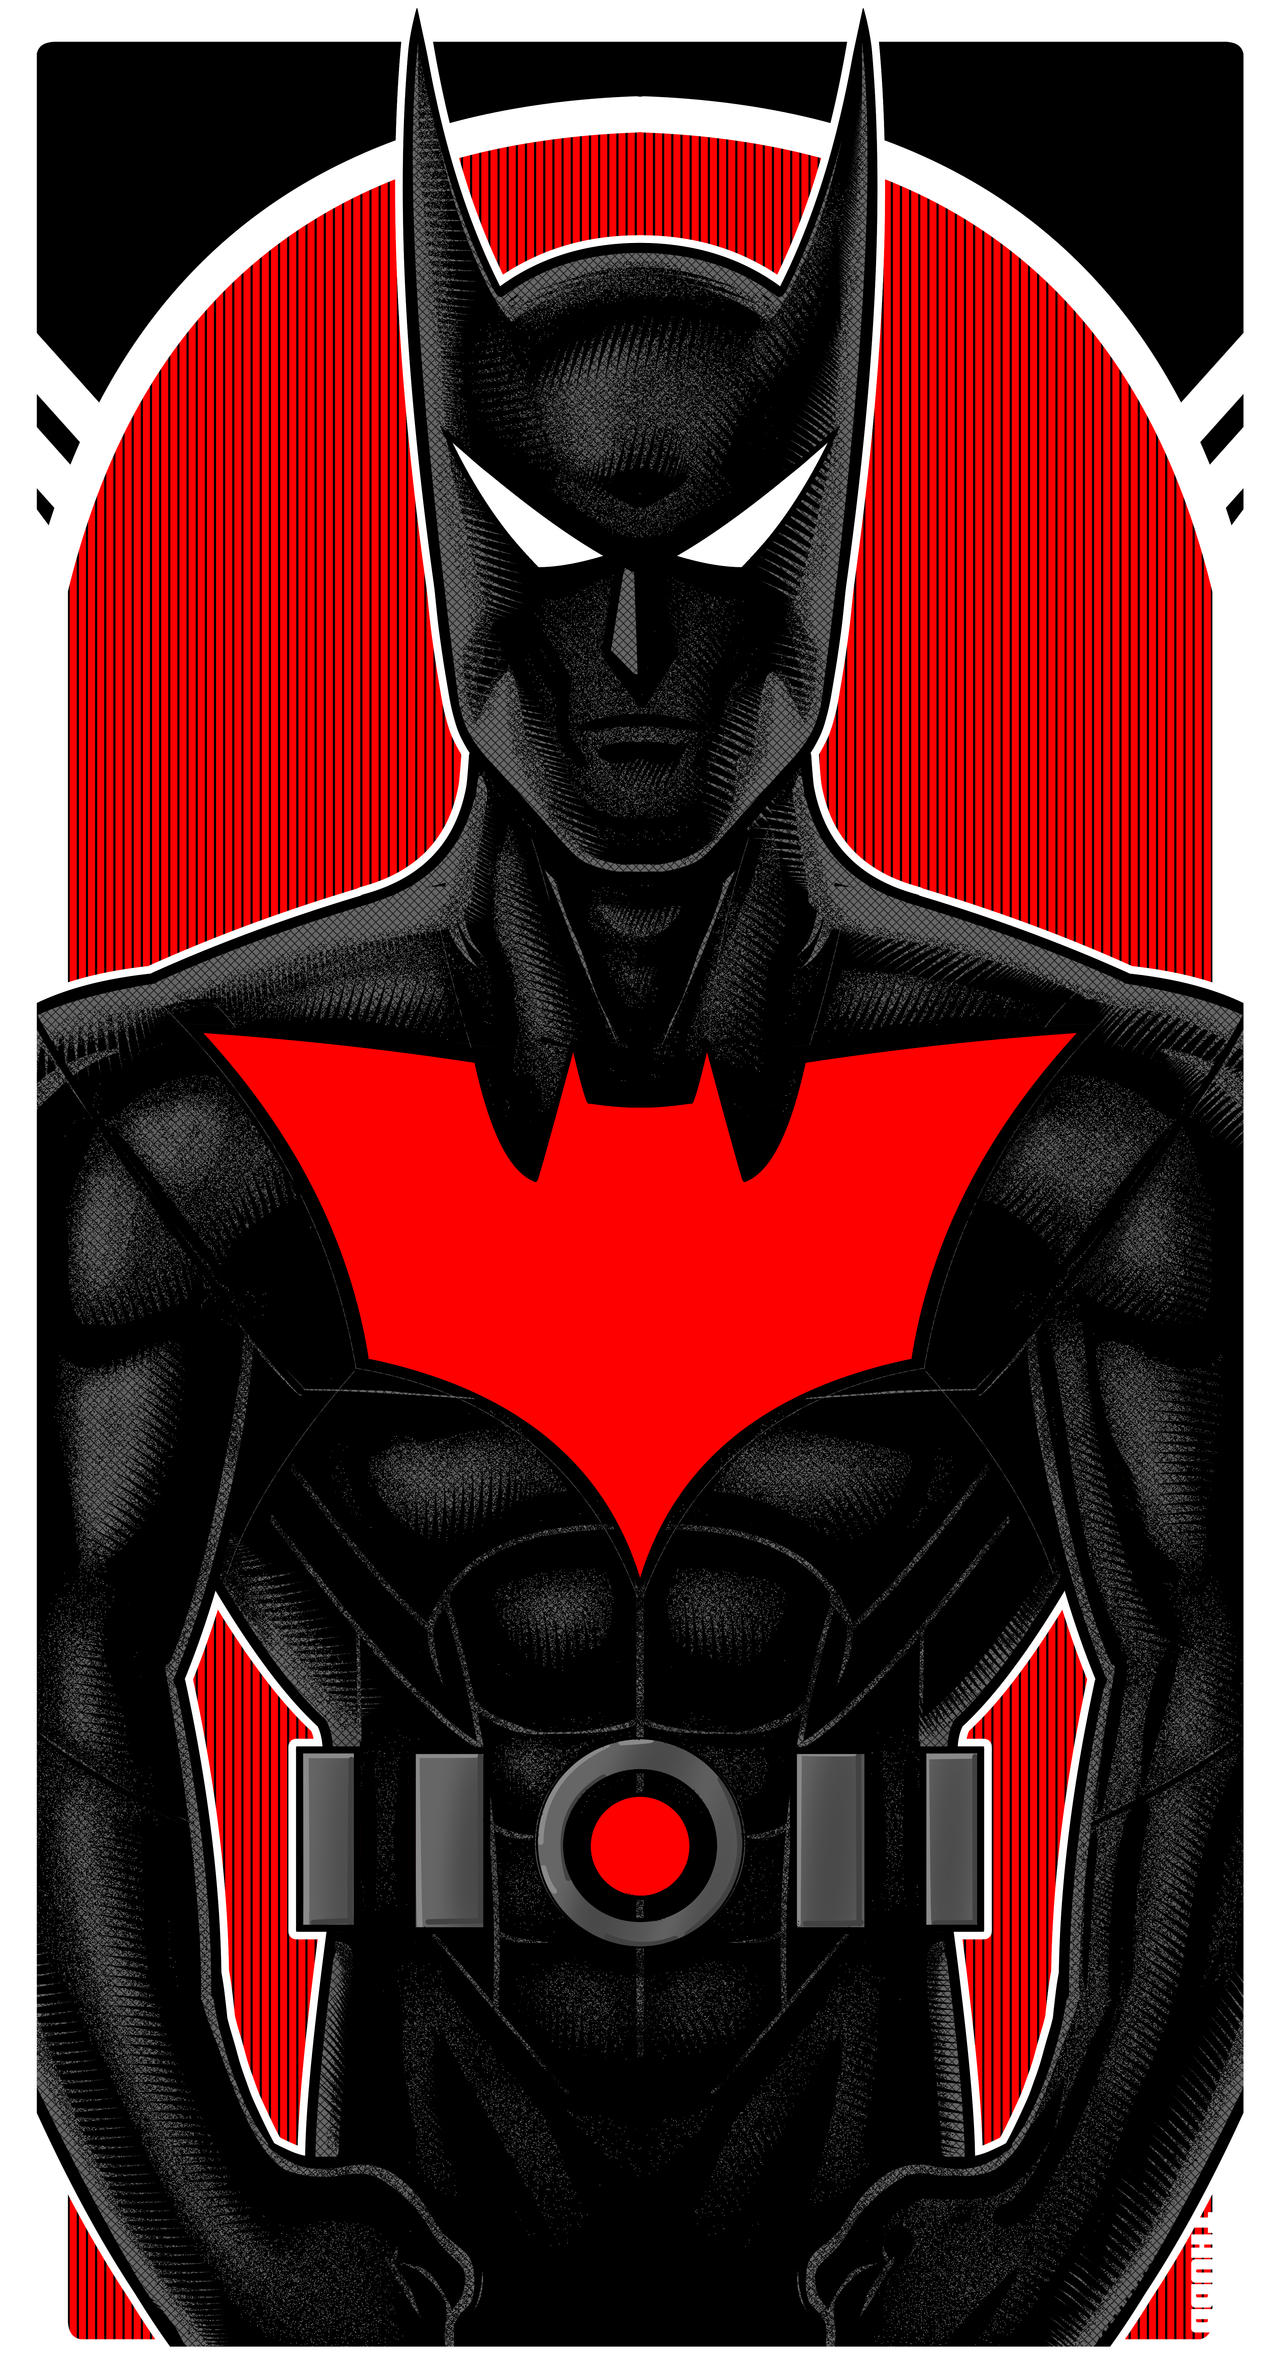 batman beyond icon by thuddleston on deviantart